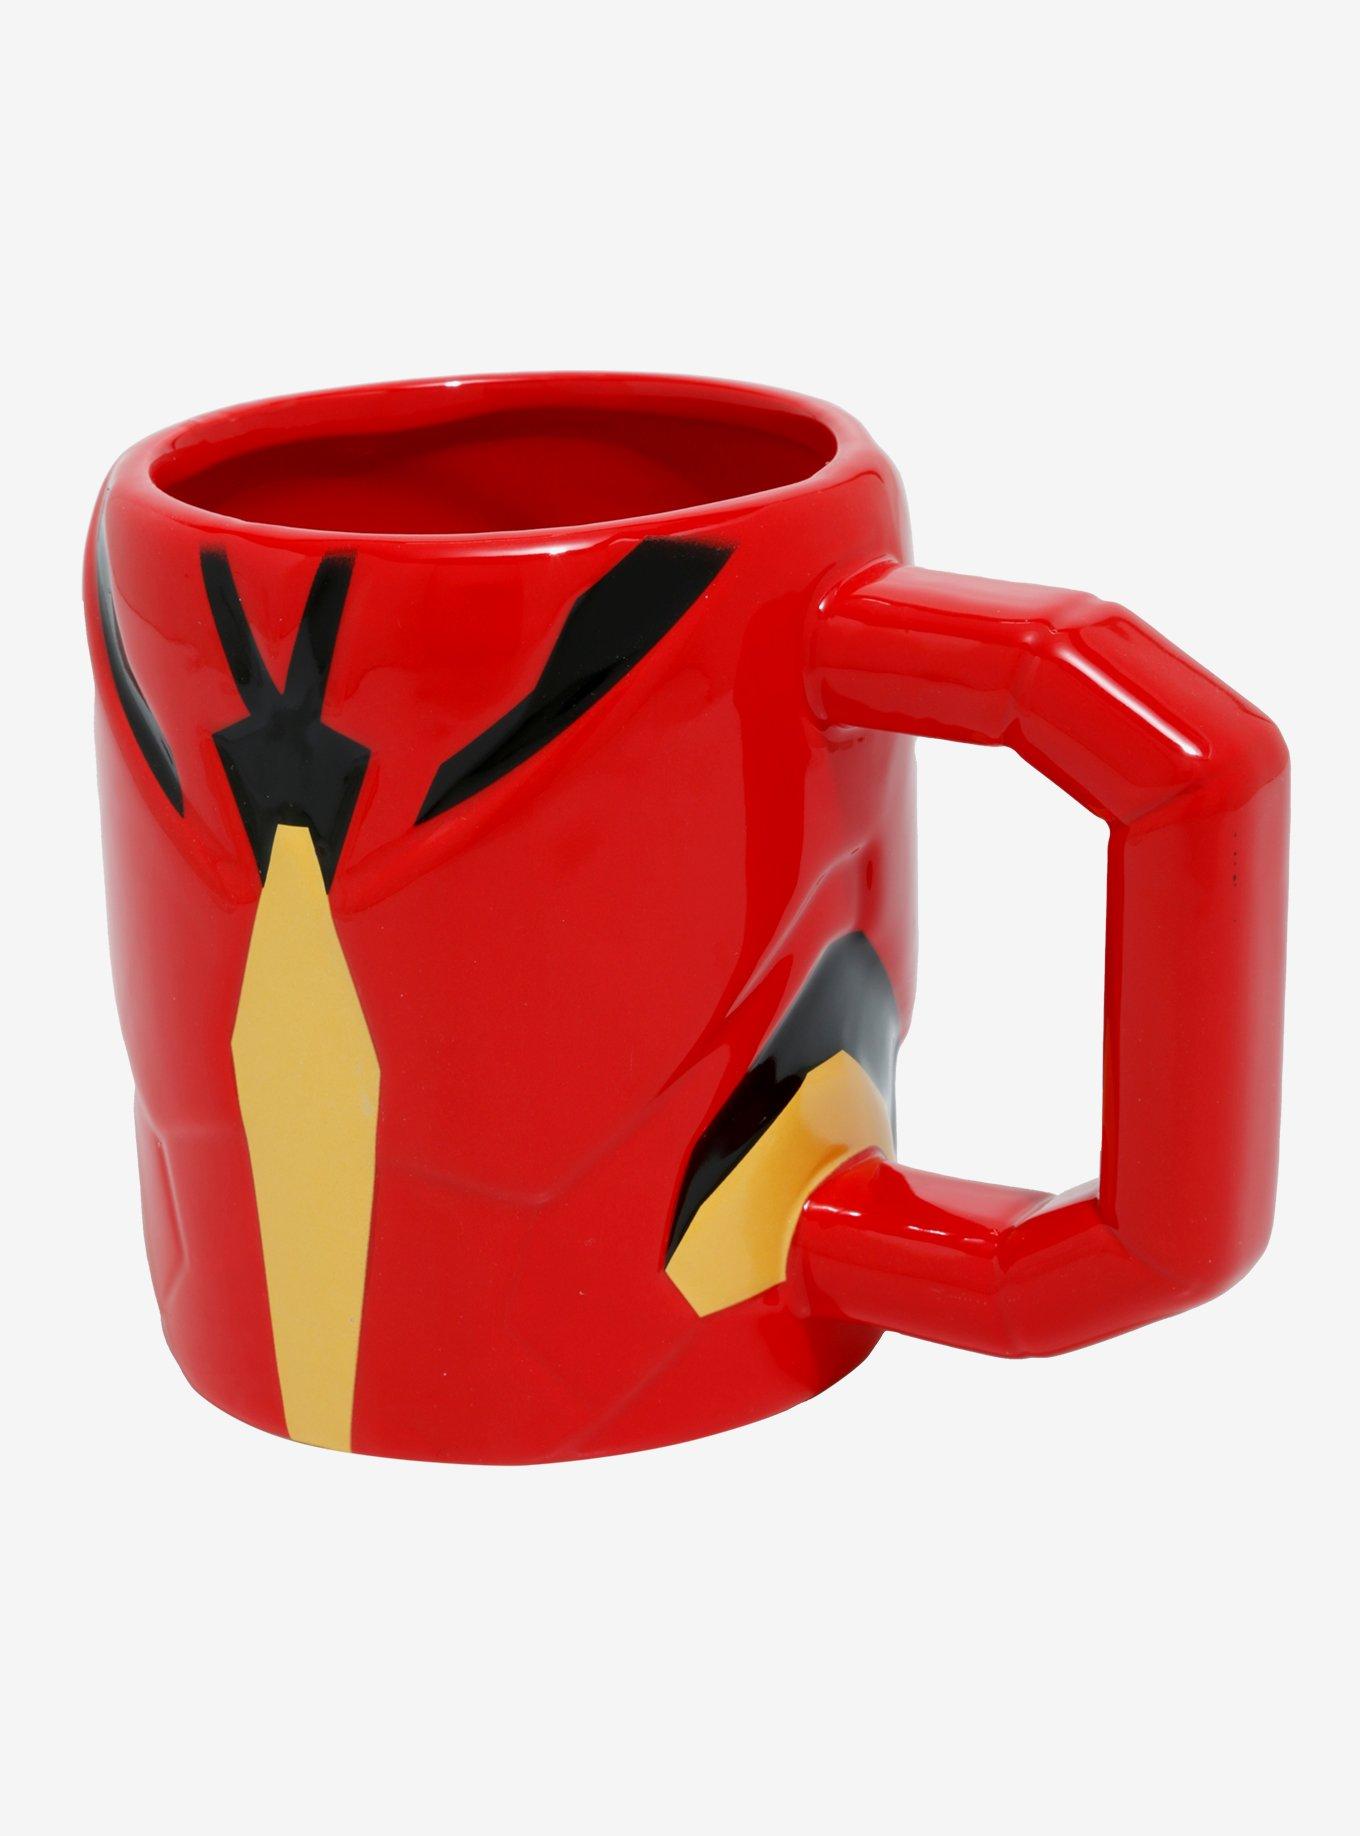 Marvel Iron Man Heat Reactor Ceramic Mug, , alternate